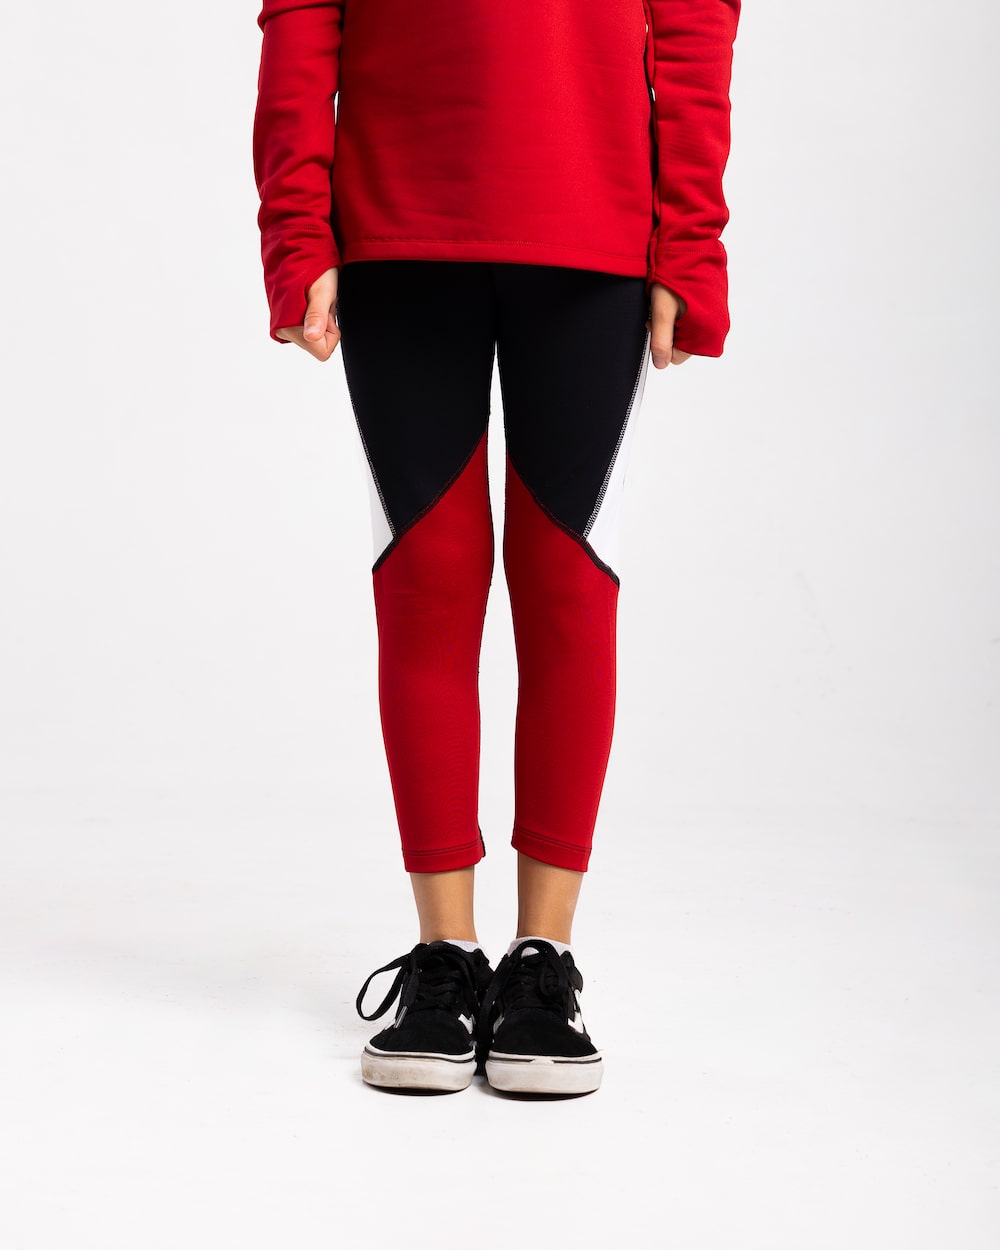 NIKE Nike W ONE CROP HBR GRX - Leggings - Women's - black/lt photo  blue/chile red - Private Sport Shop